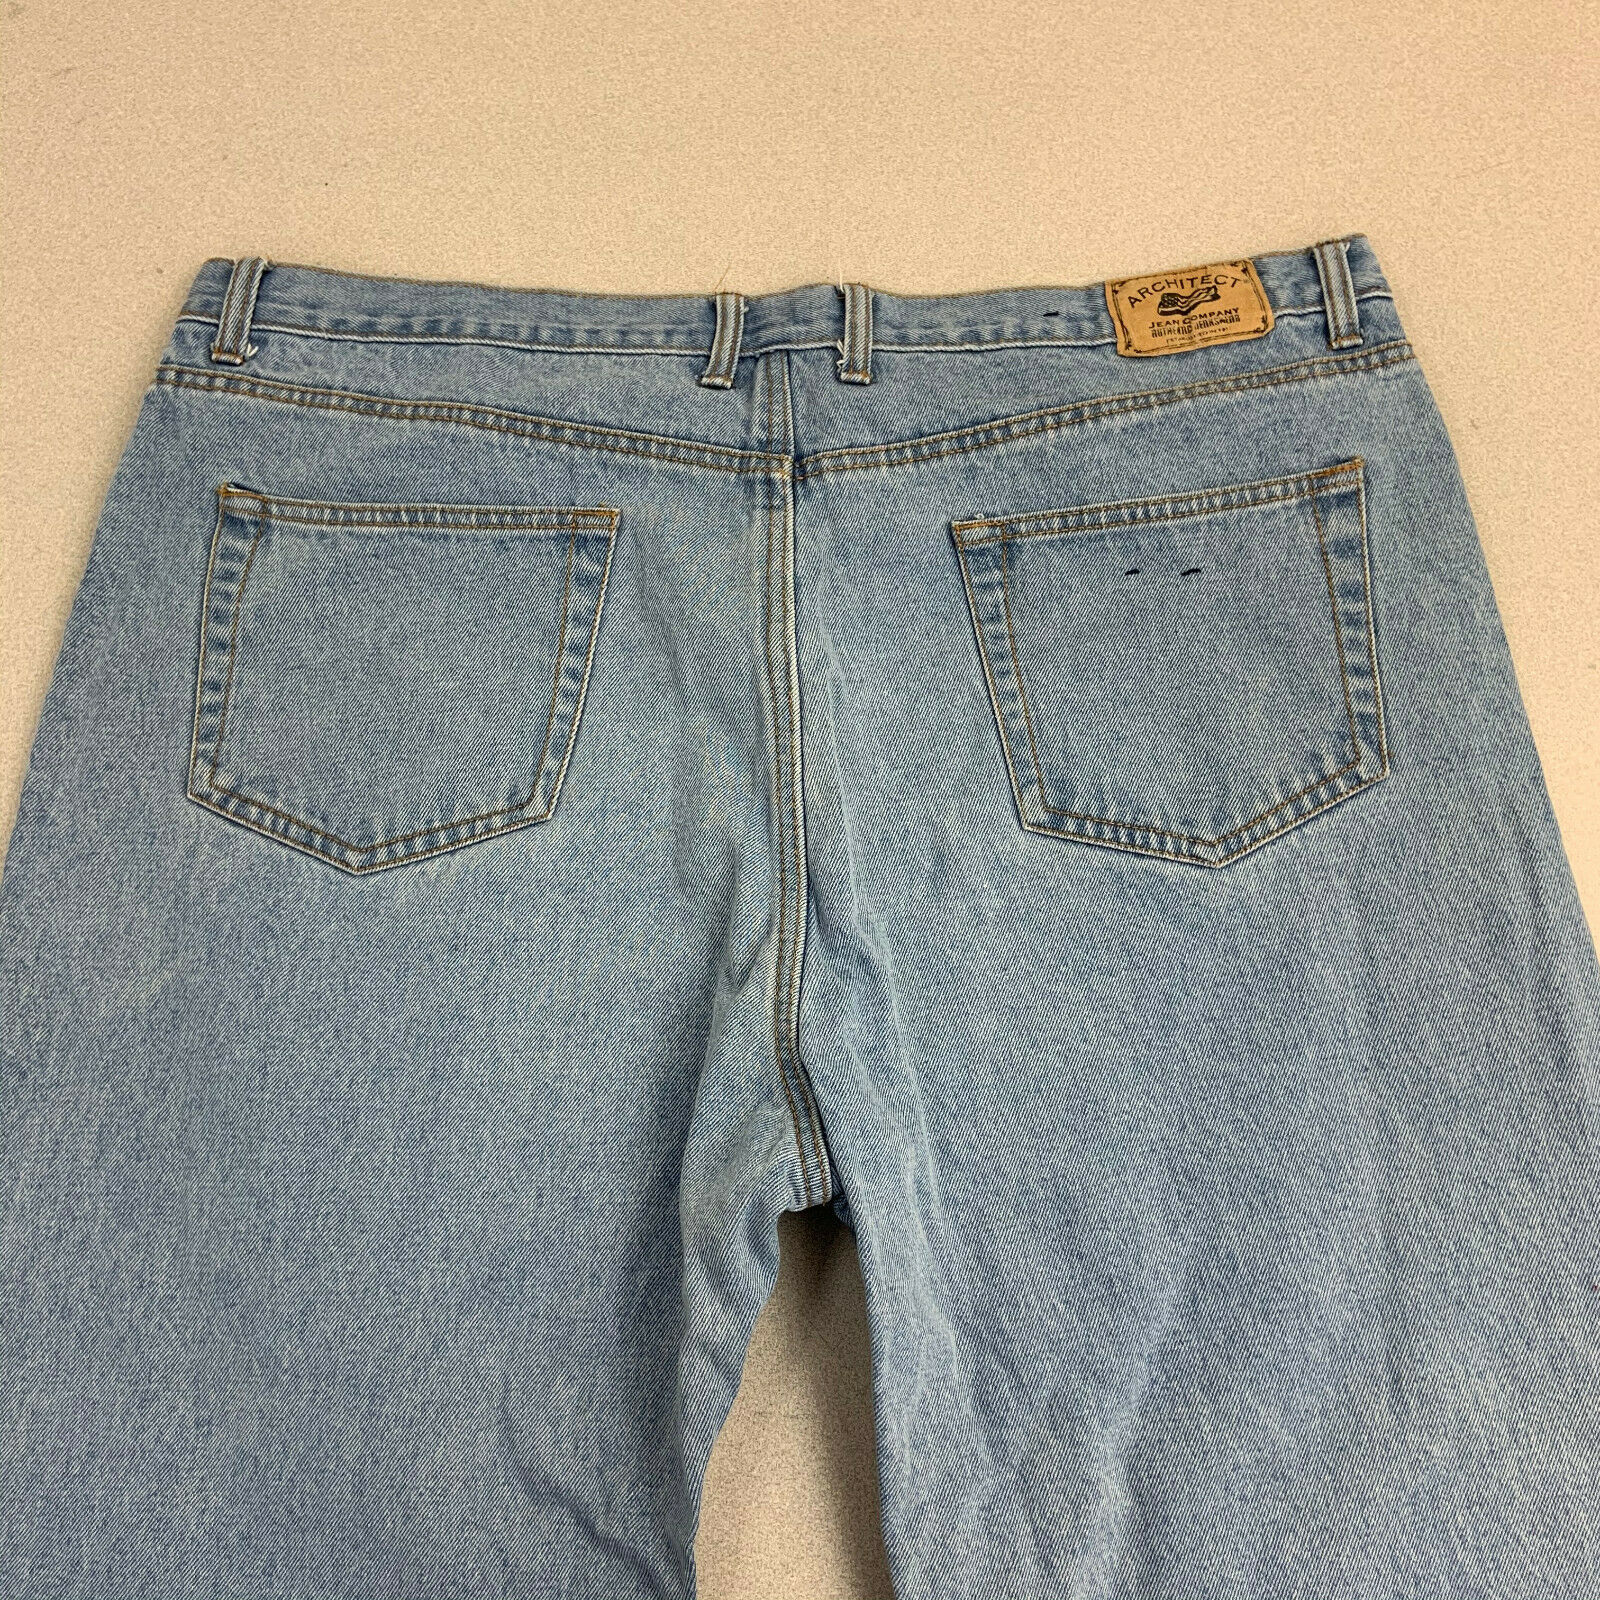 ARCHITECT JEAN COMPANY Men's Size 42 x 32 Regular Fit Blue Jeans - Jeans